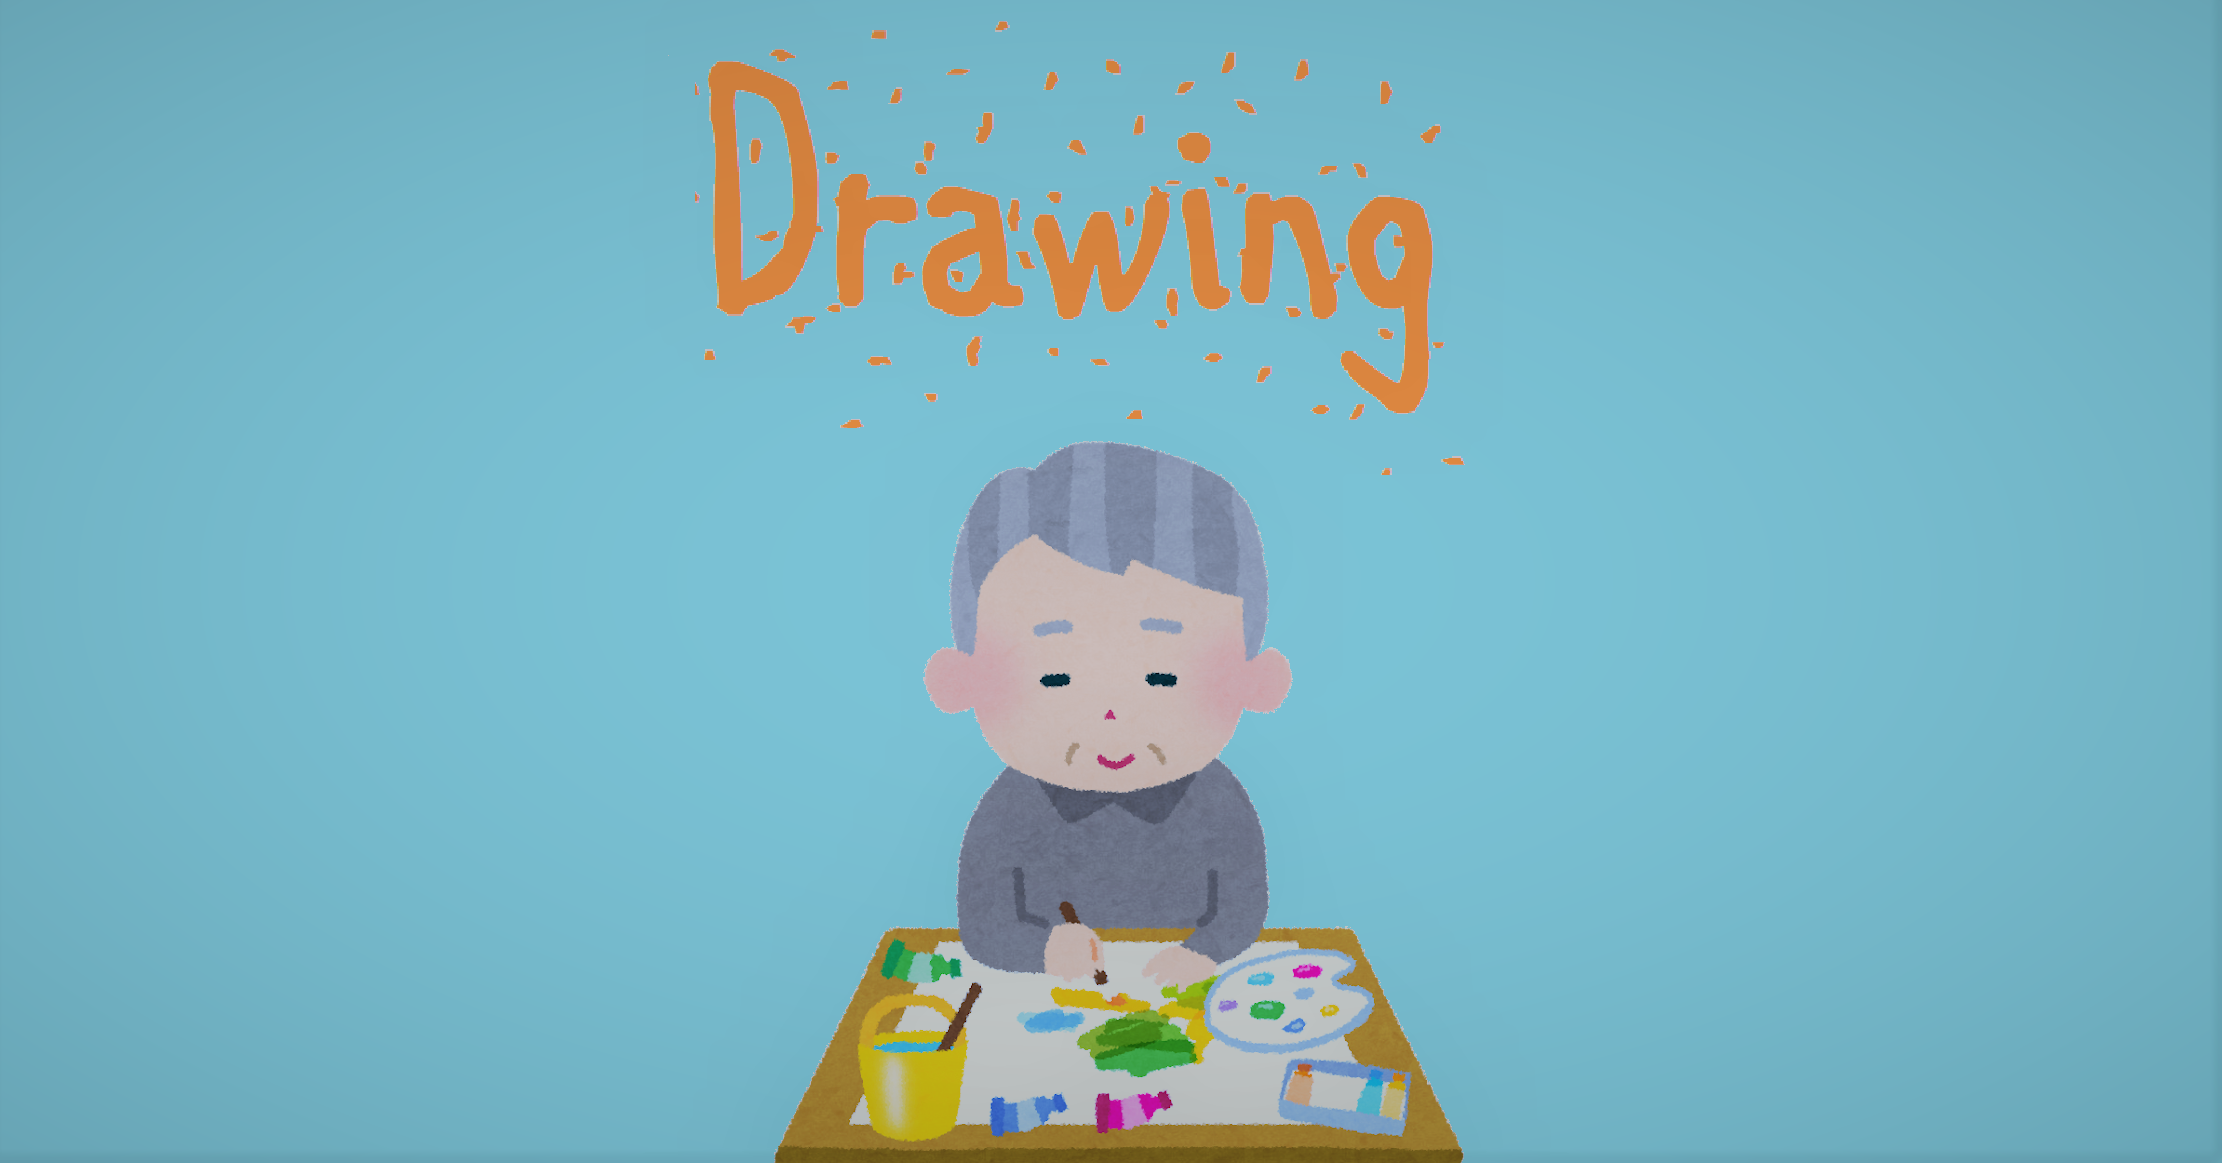 「Drawing」のイメージ